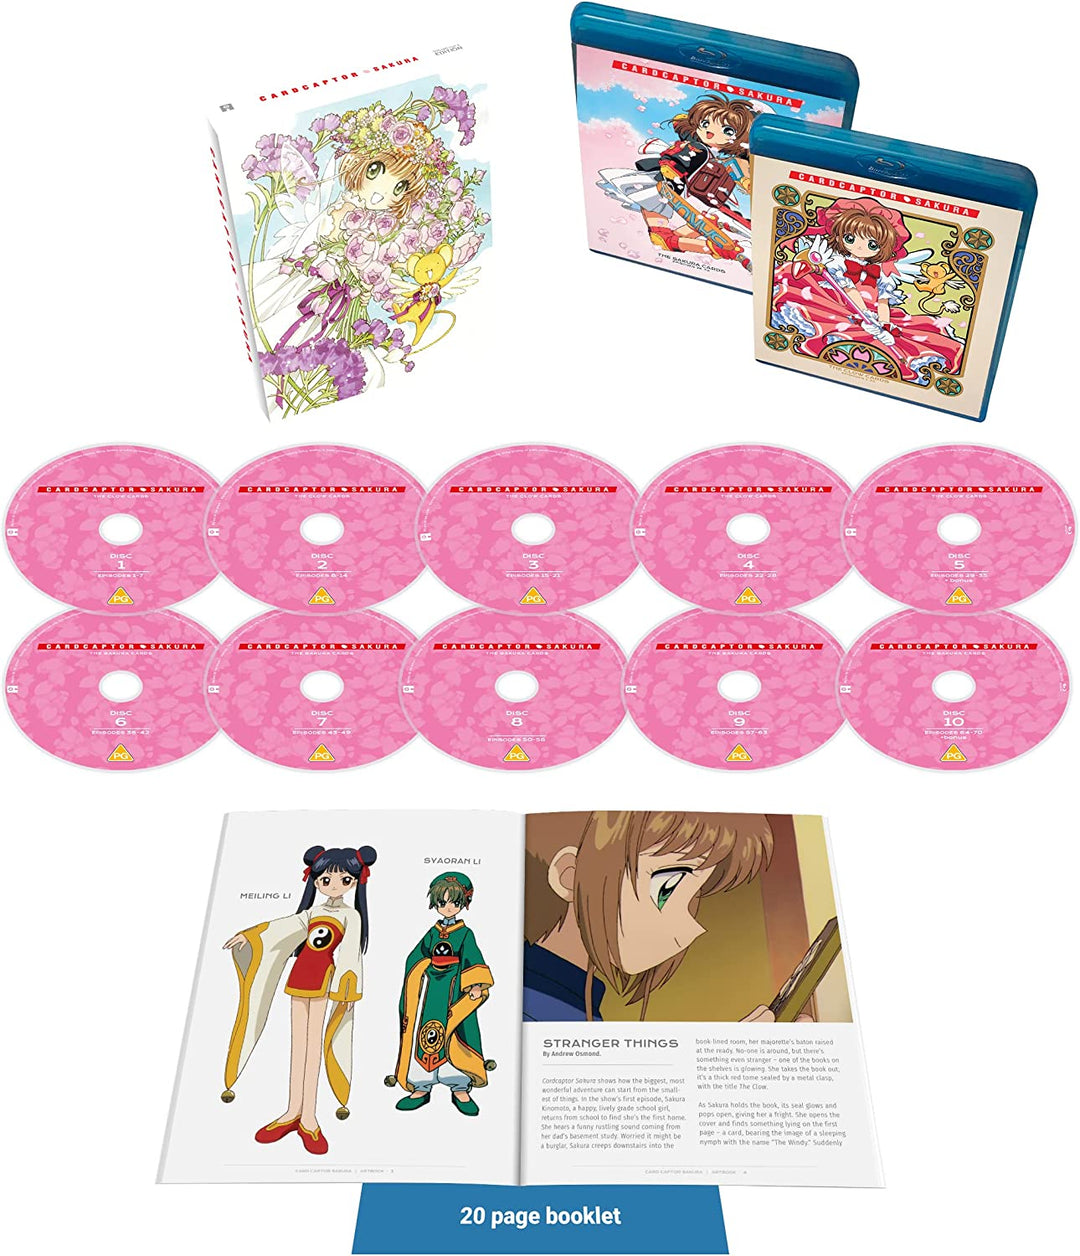 Card Captor Sakura TV-Serie (Collector's Limited Edition) [Blu-ray]